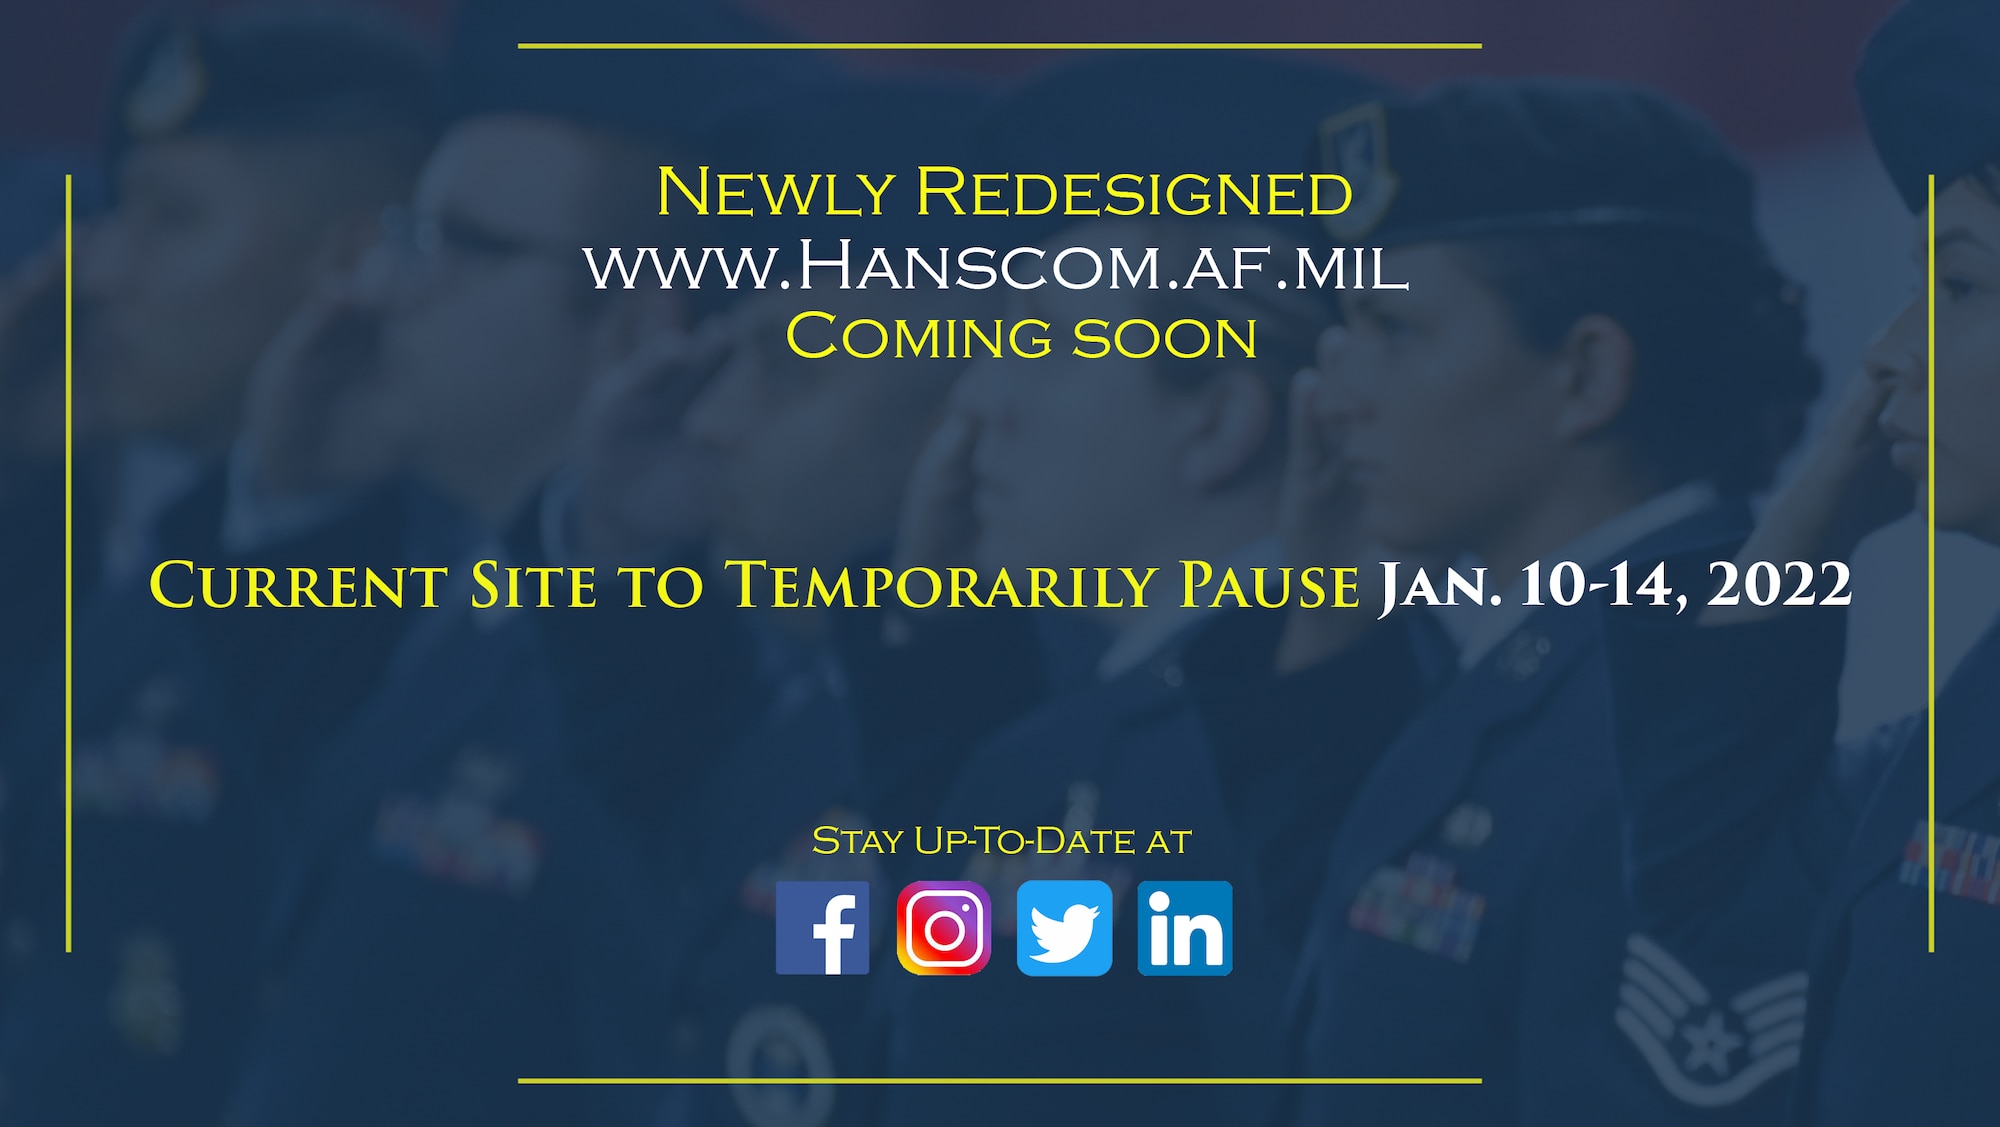 Air Force officials will be redesigning the Hanscom Air Force Base, Mass., public website (hanscom.af.mil) beginning Jan. 10.